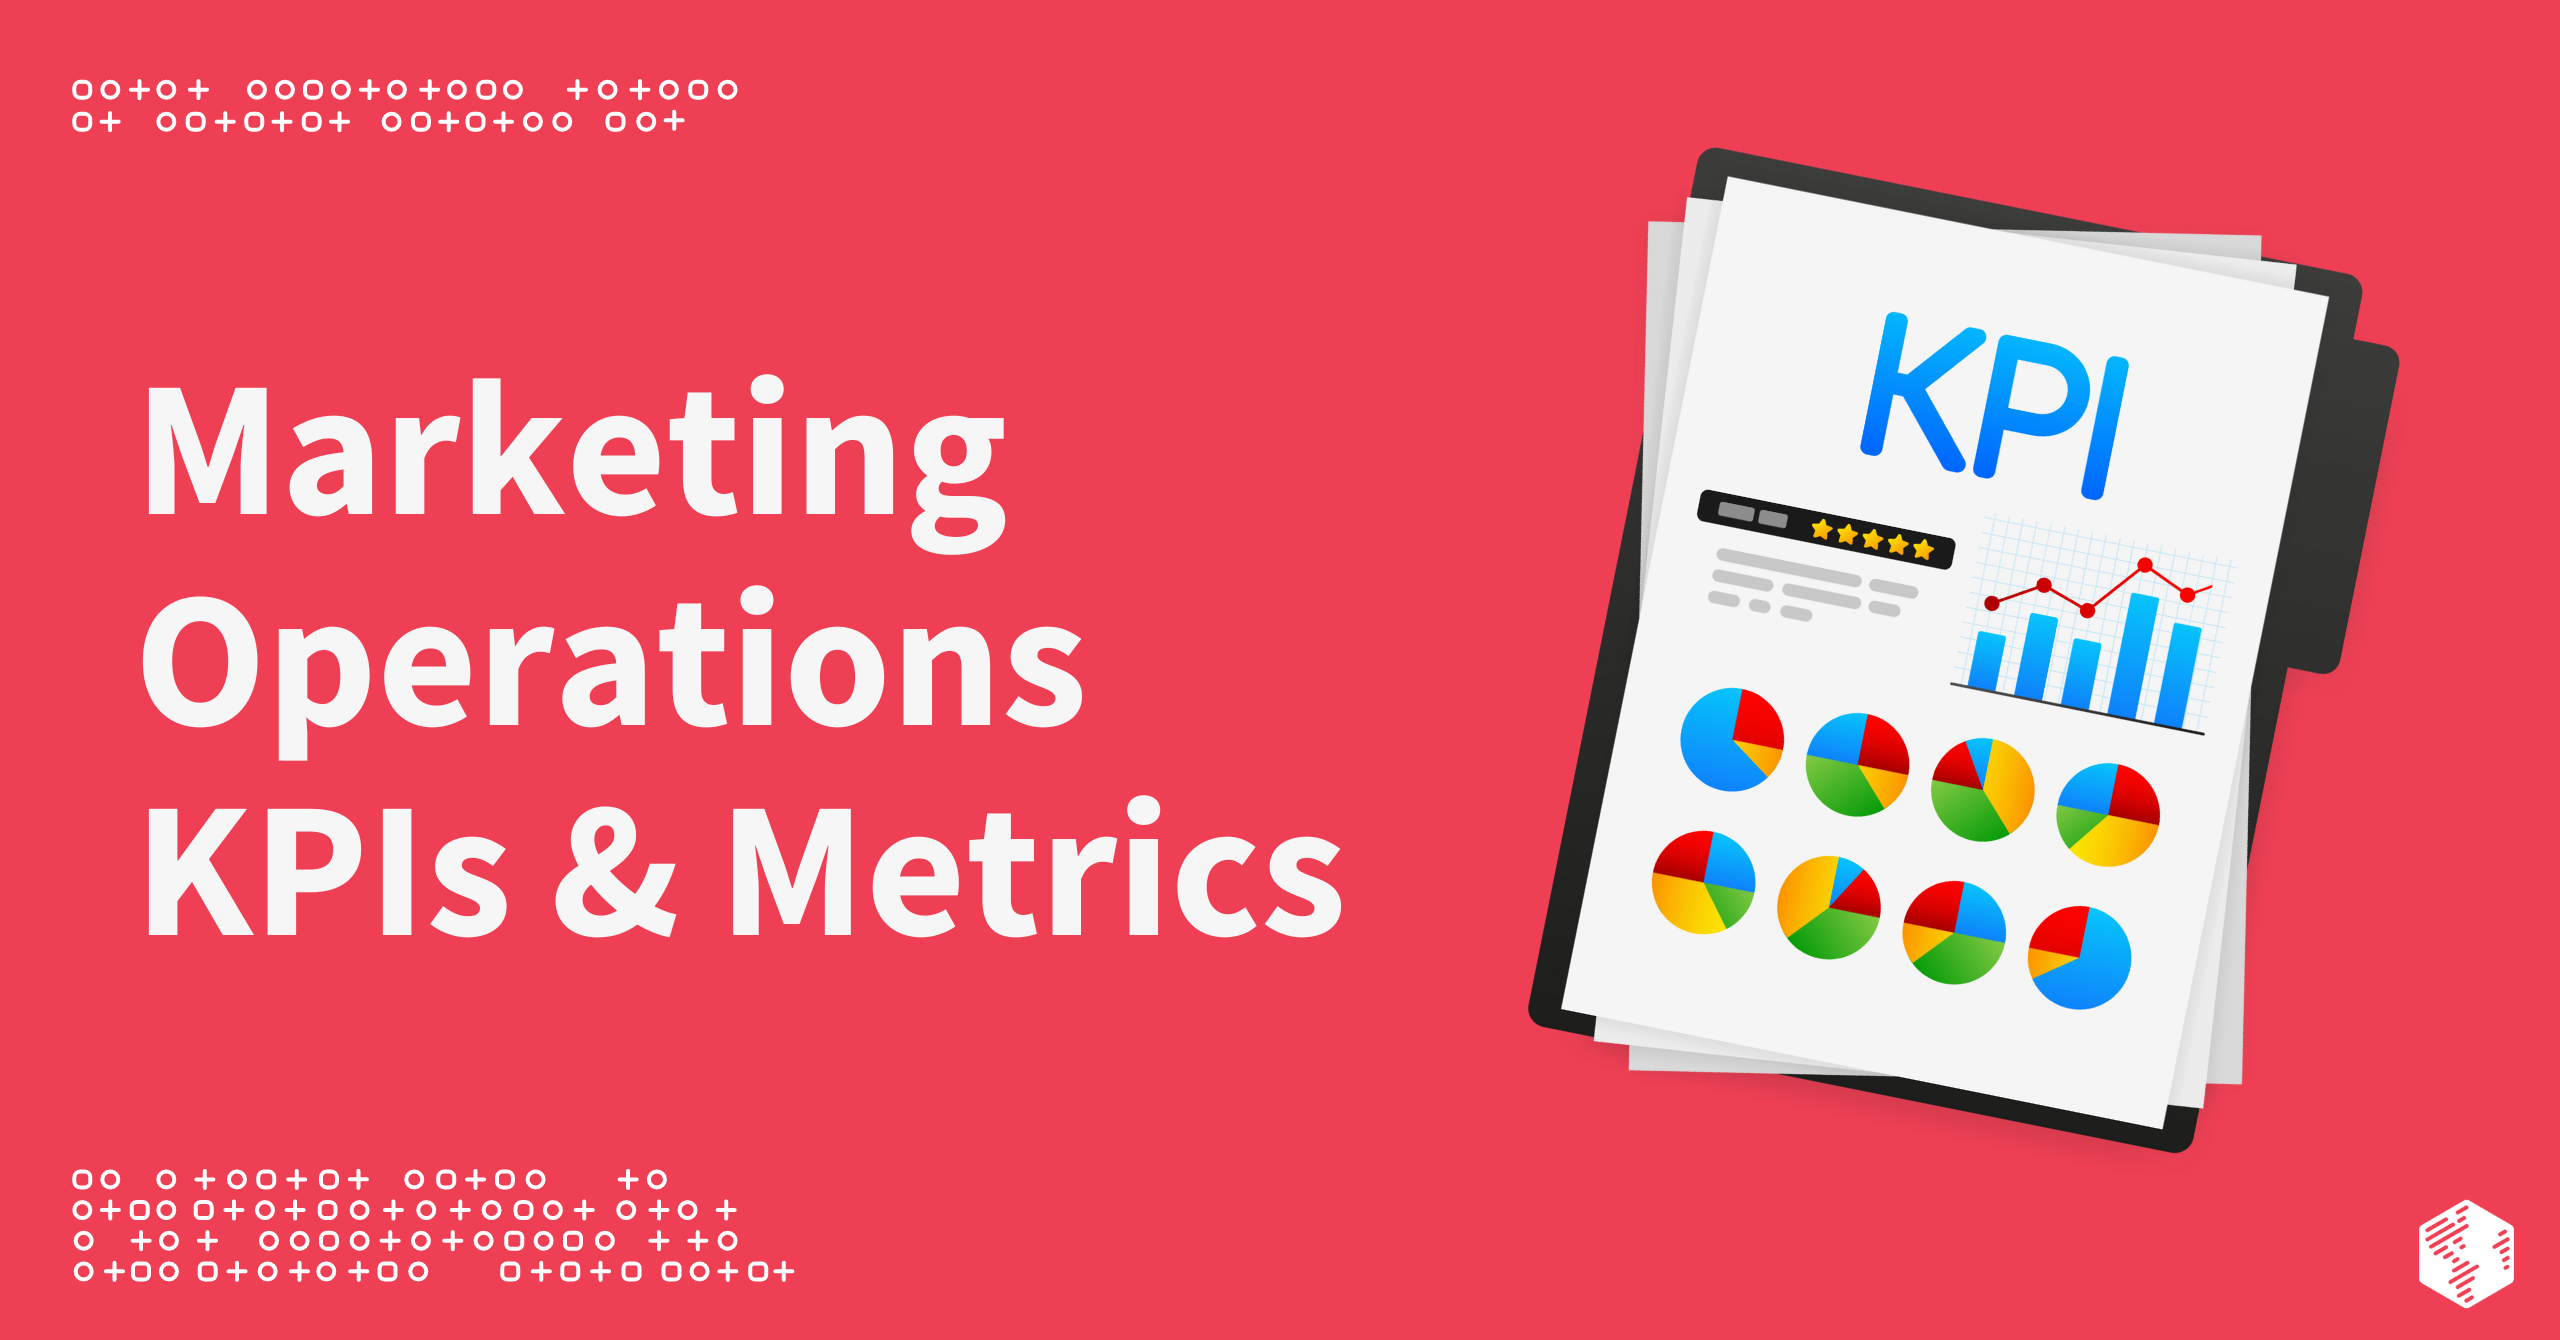 Marketing Operations KPIs & Metrics, Explained